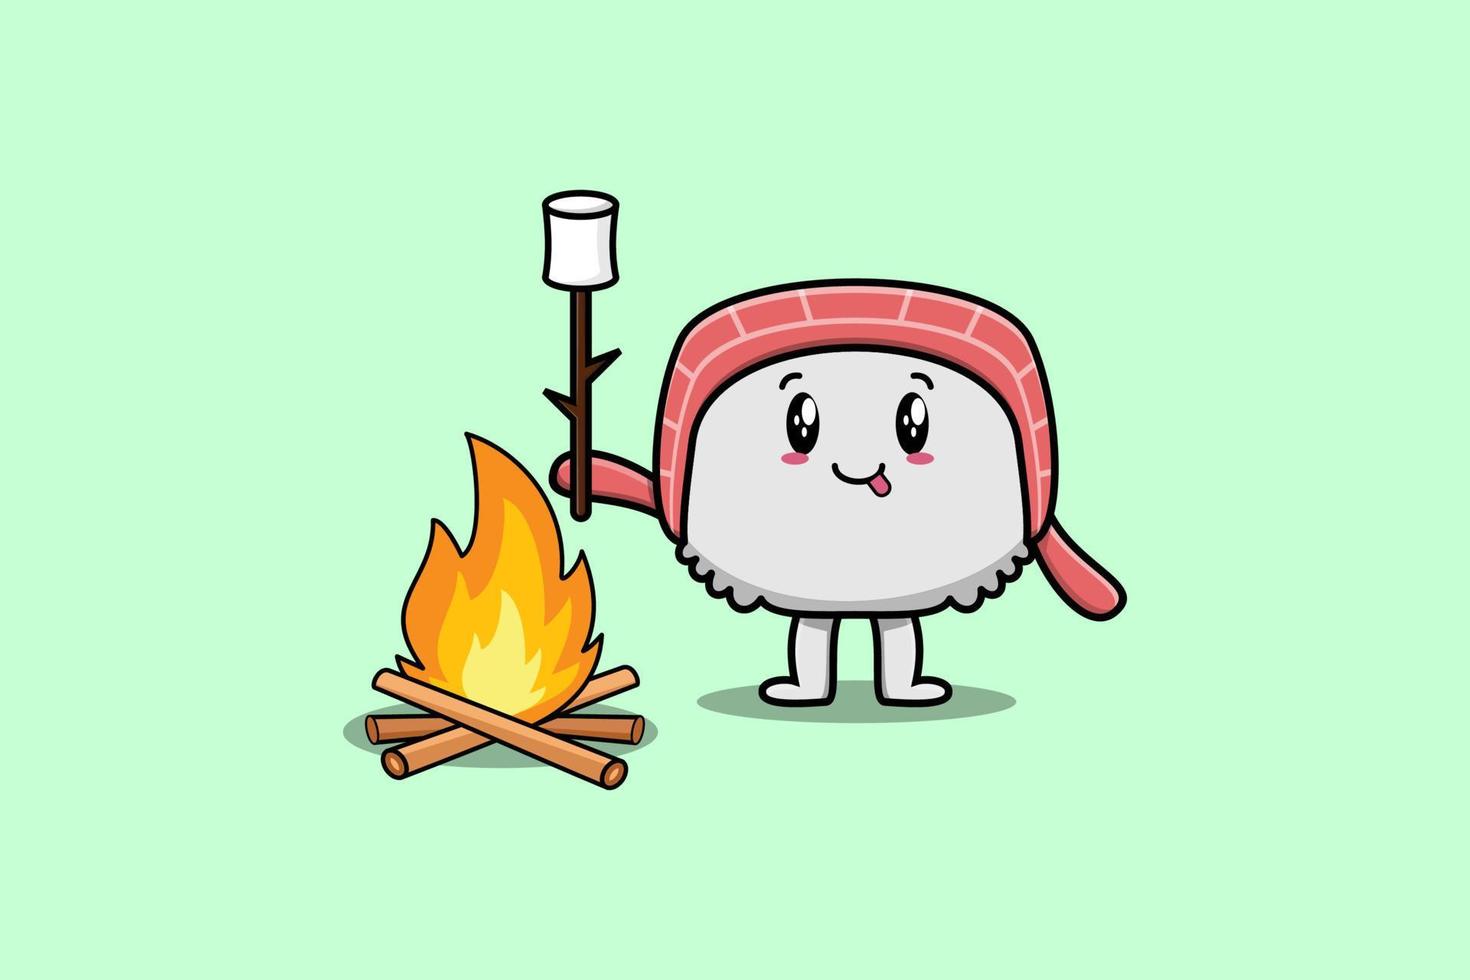 Cute cartoon Sushi character burning marshmallow vector